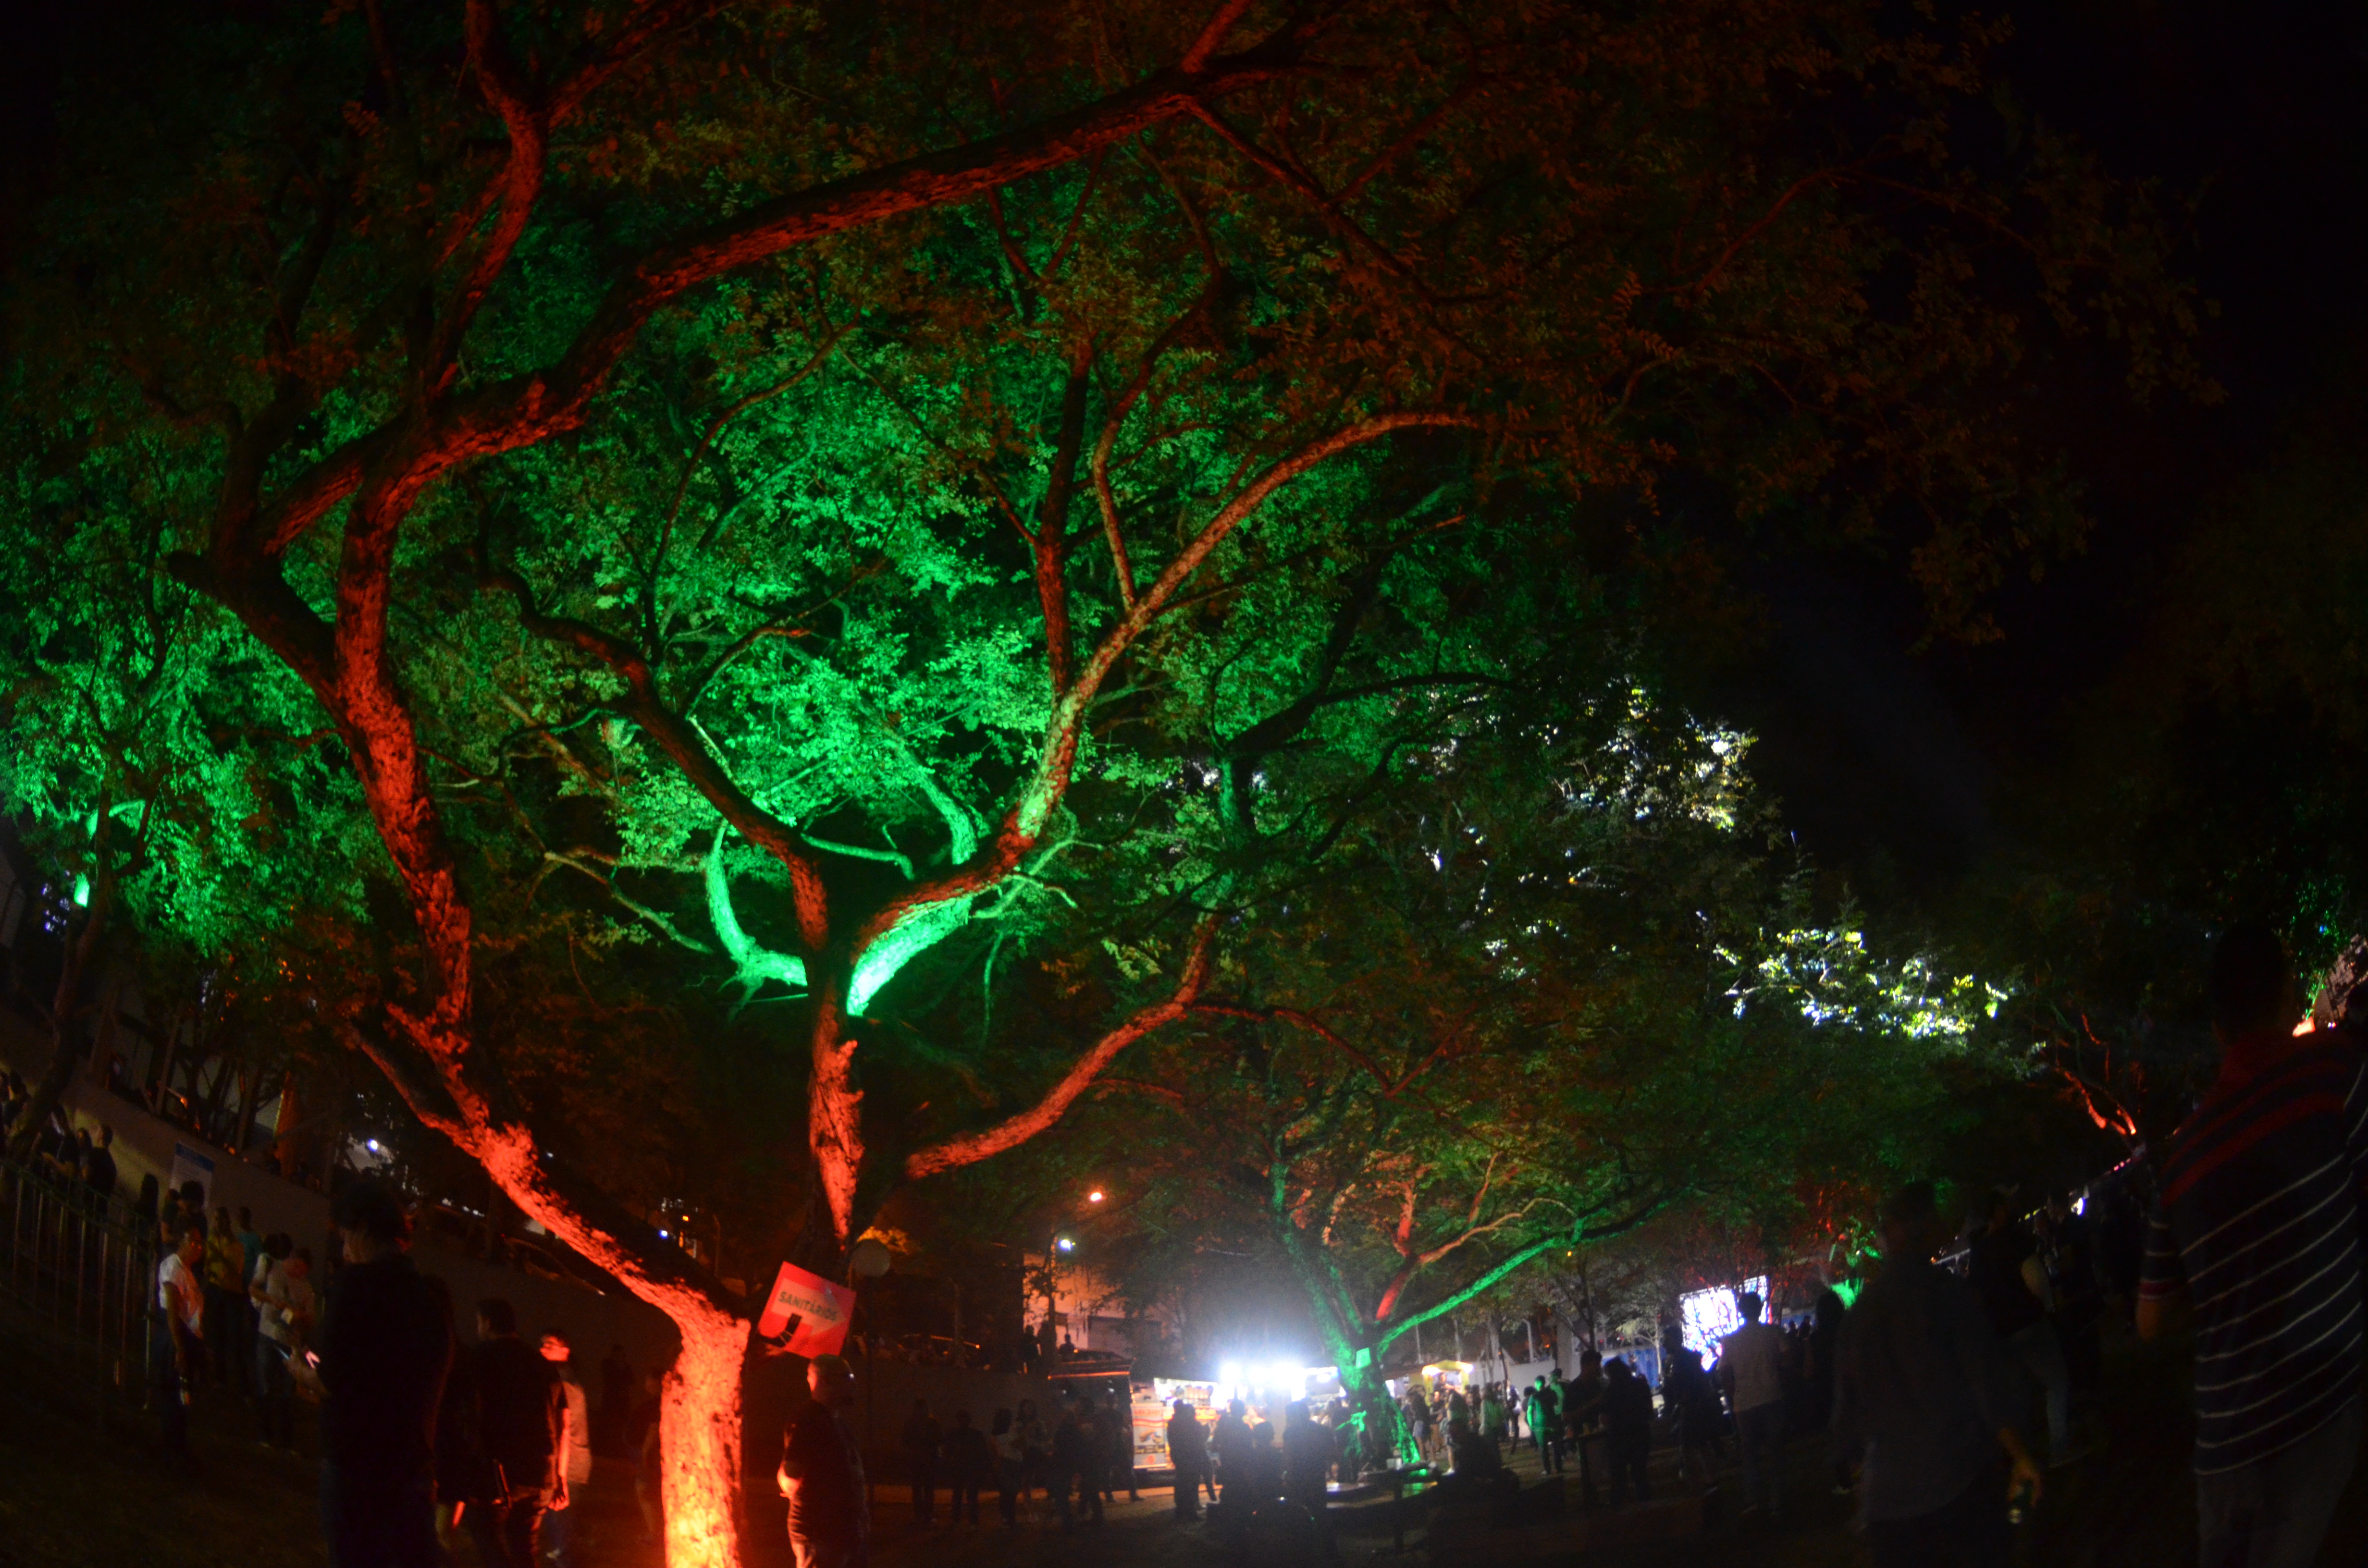 Entre as árvores durante o show do Cordel do Fogo Encantado.